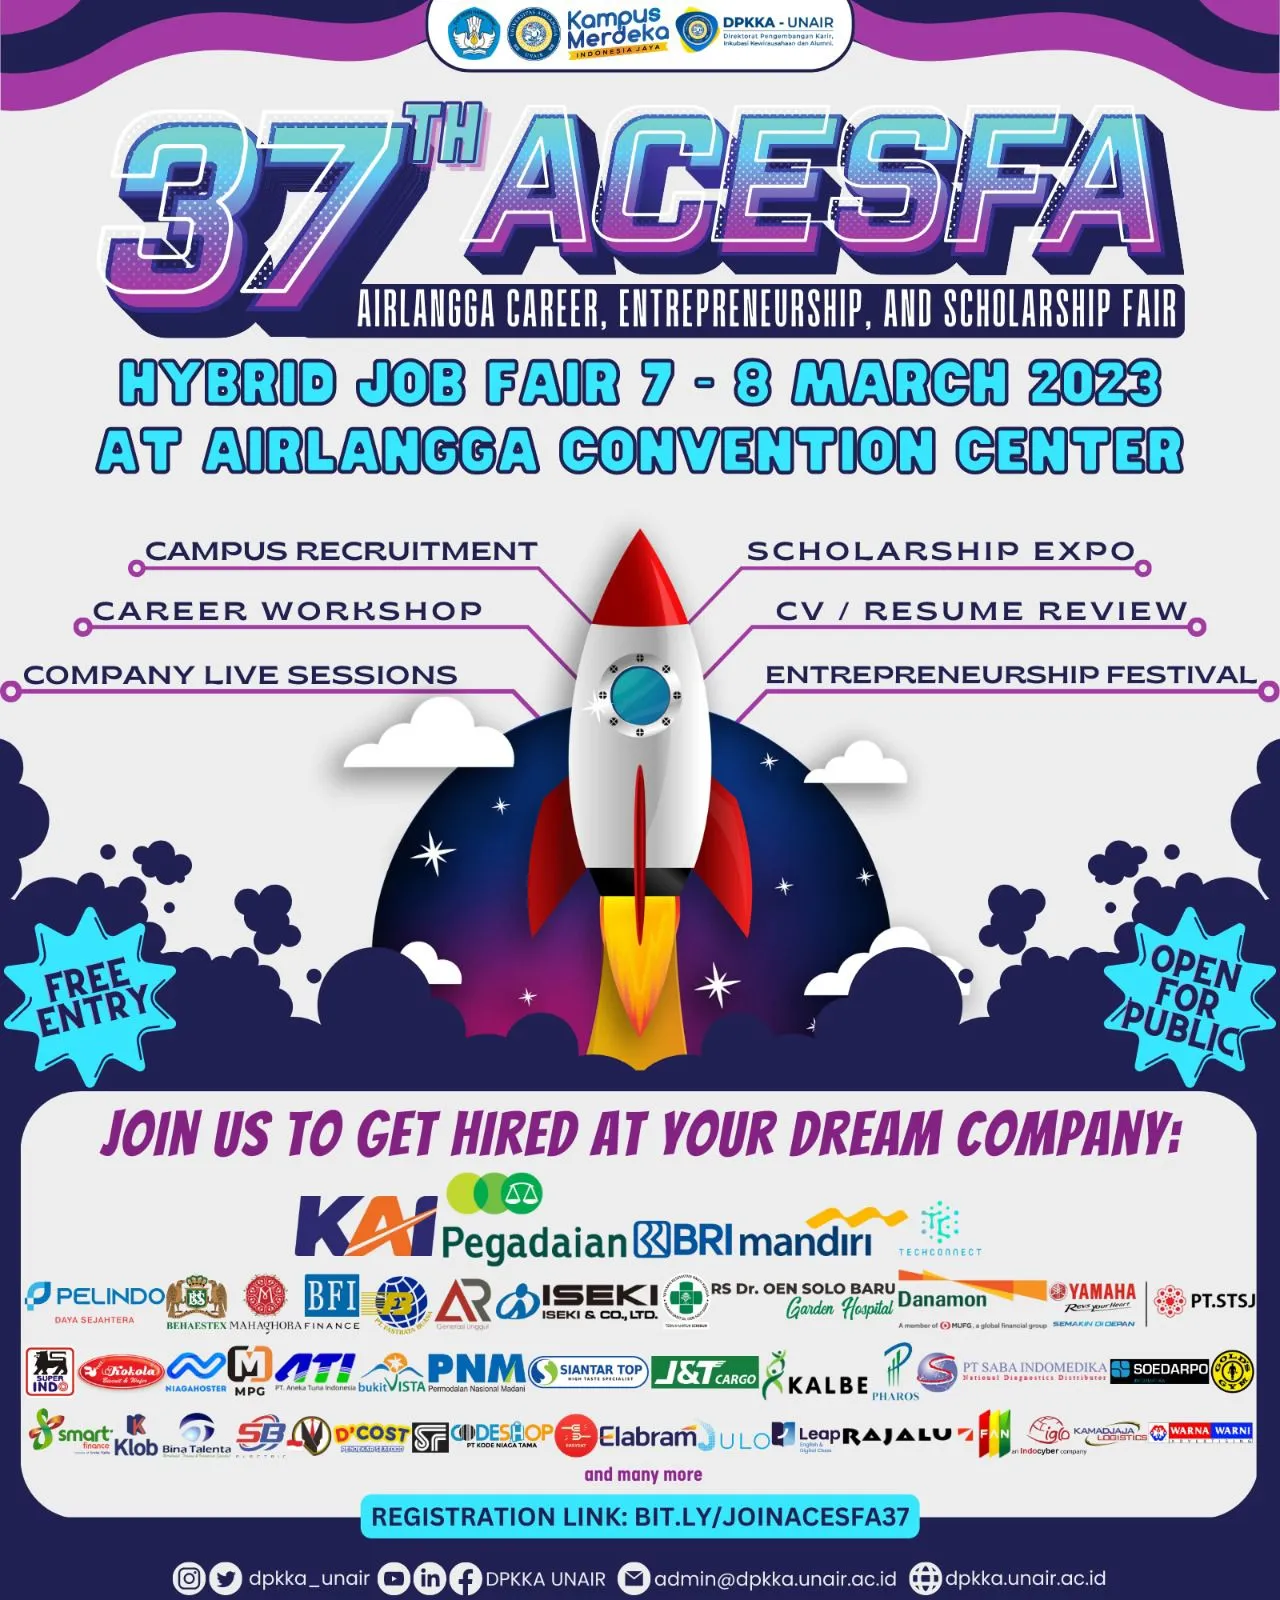 37th ACESFA (Airlangga Career Entrepreneurship and Scholarship Fair) by DPKKA UNAIR